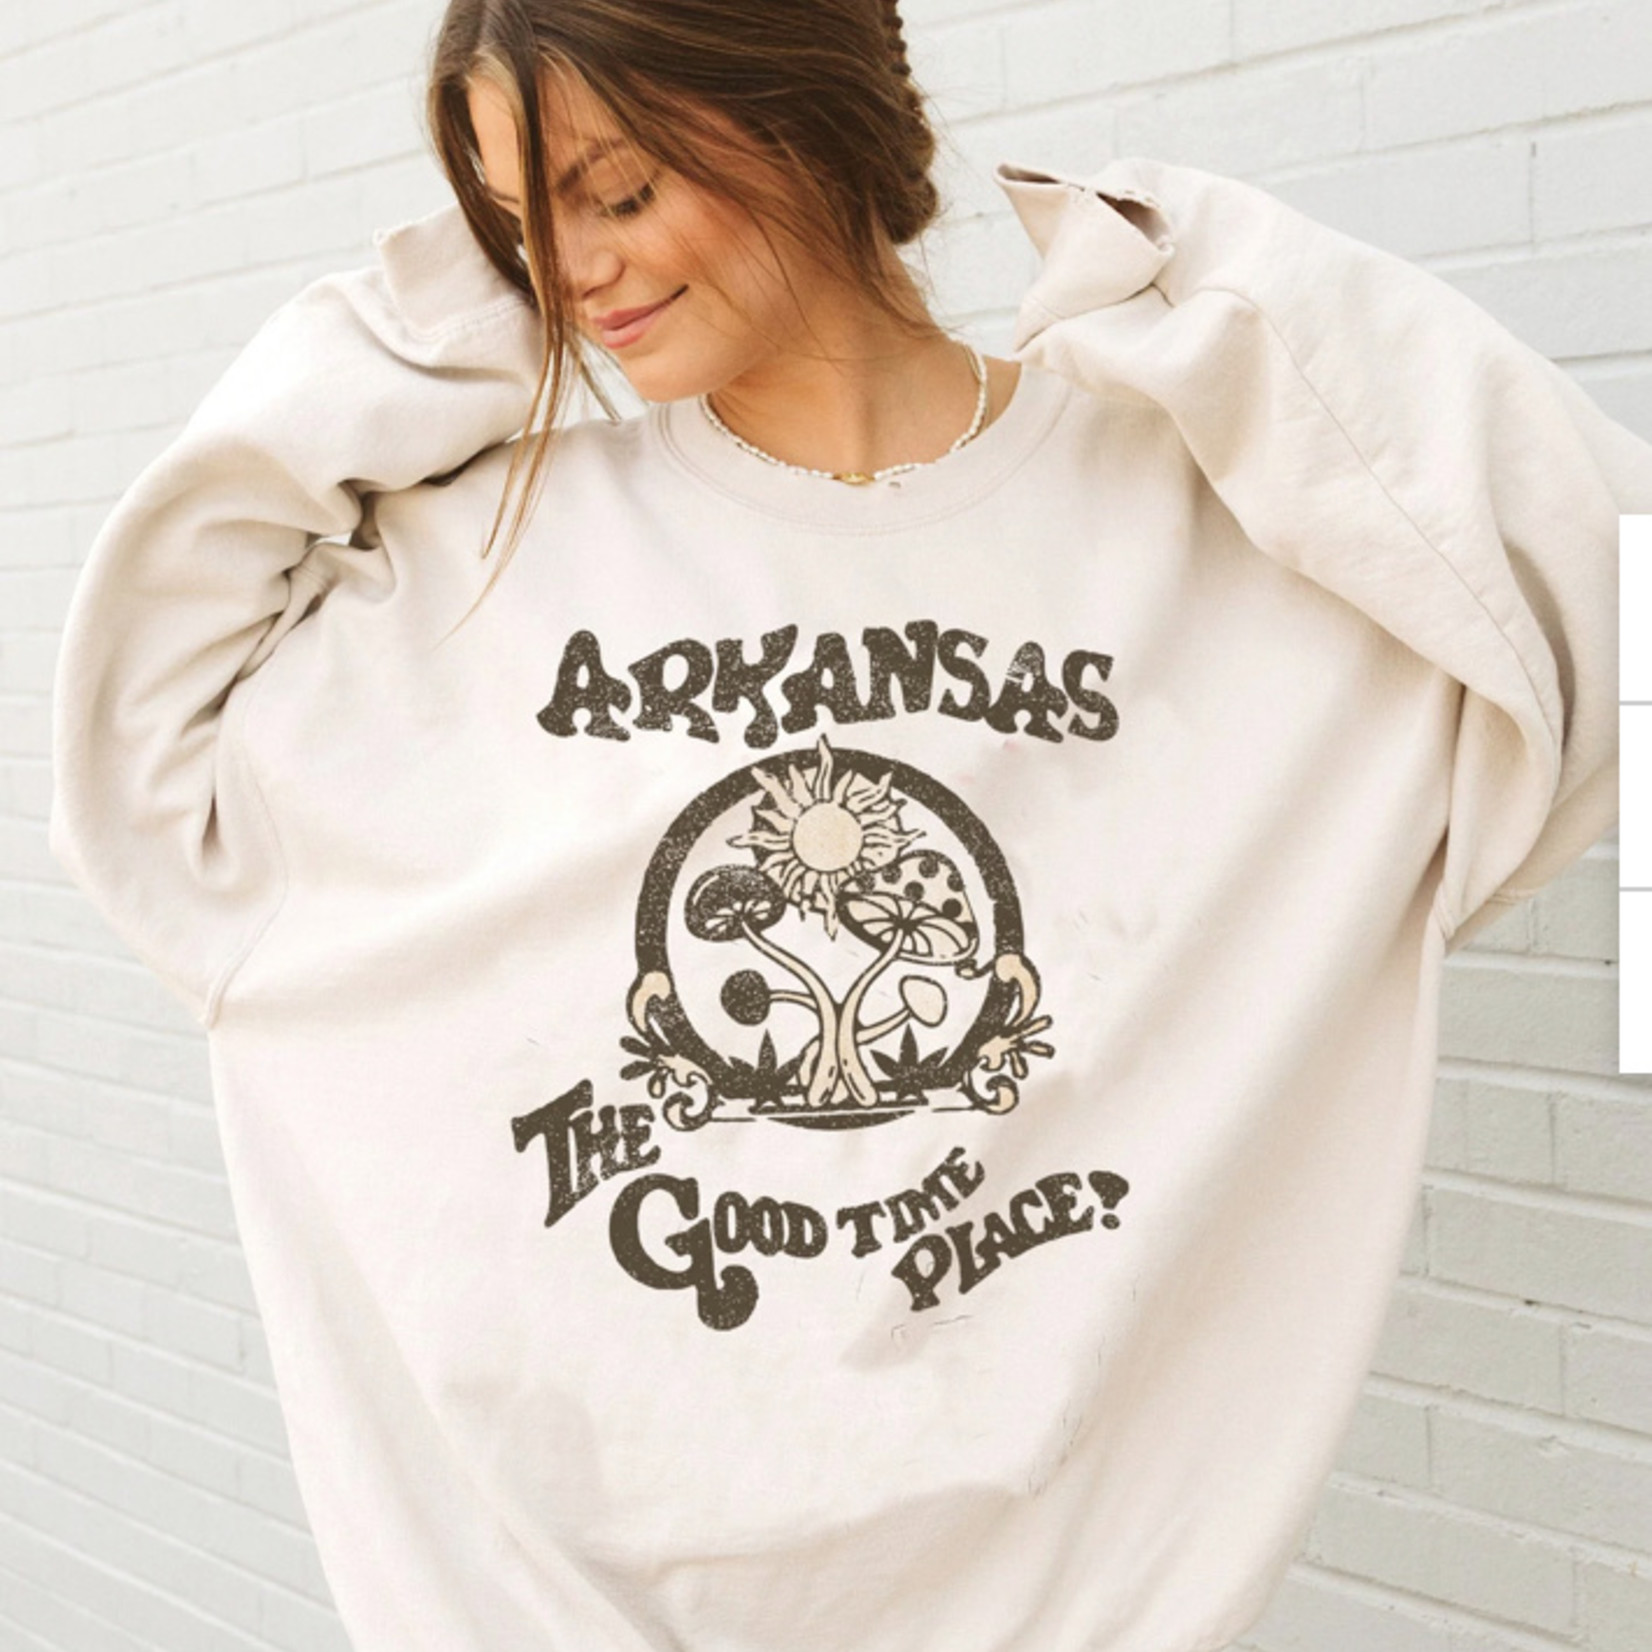 Arkansas Good Times Sweatshirt